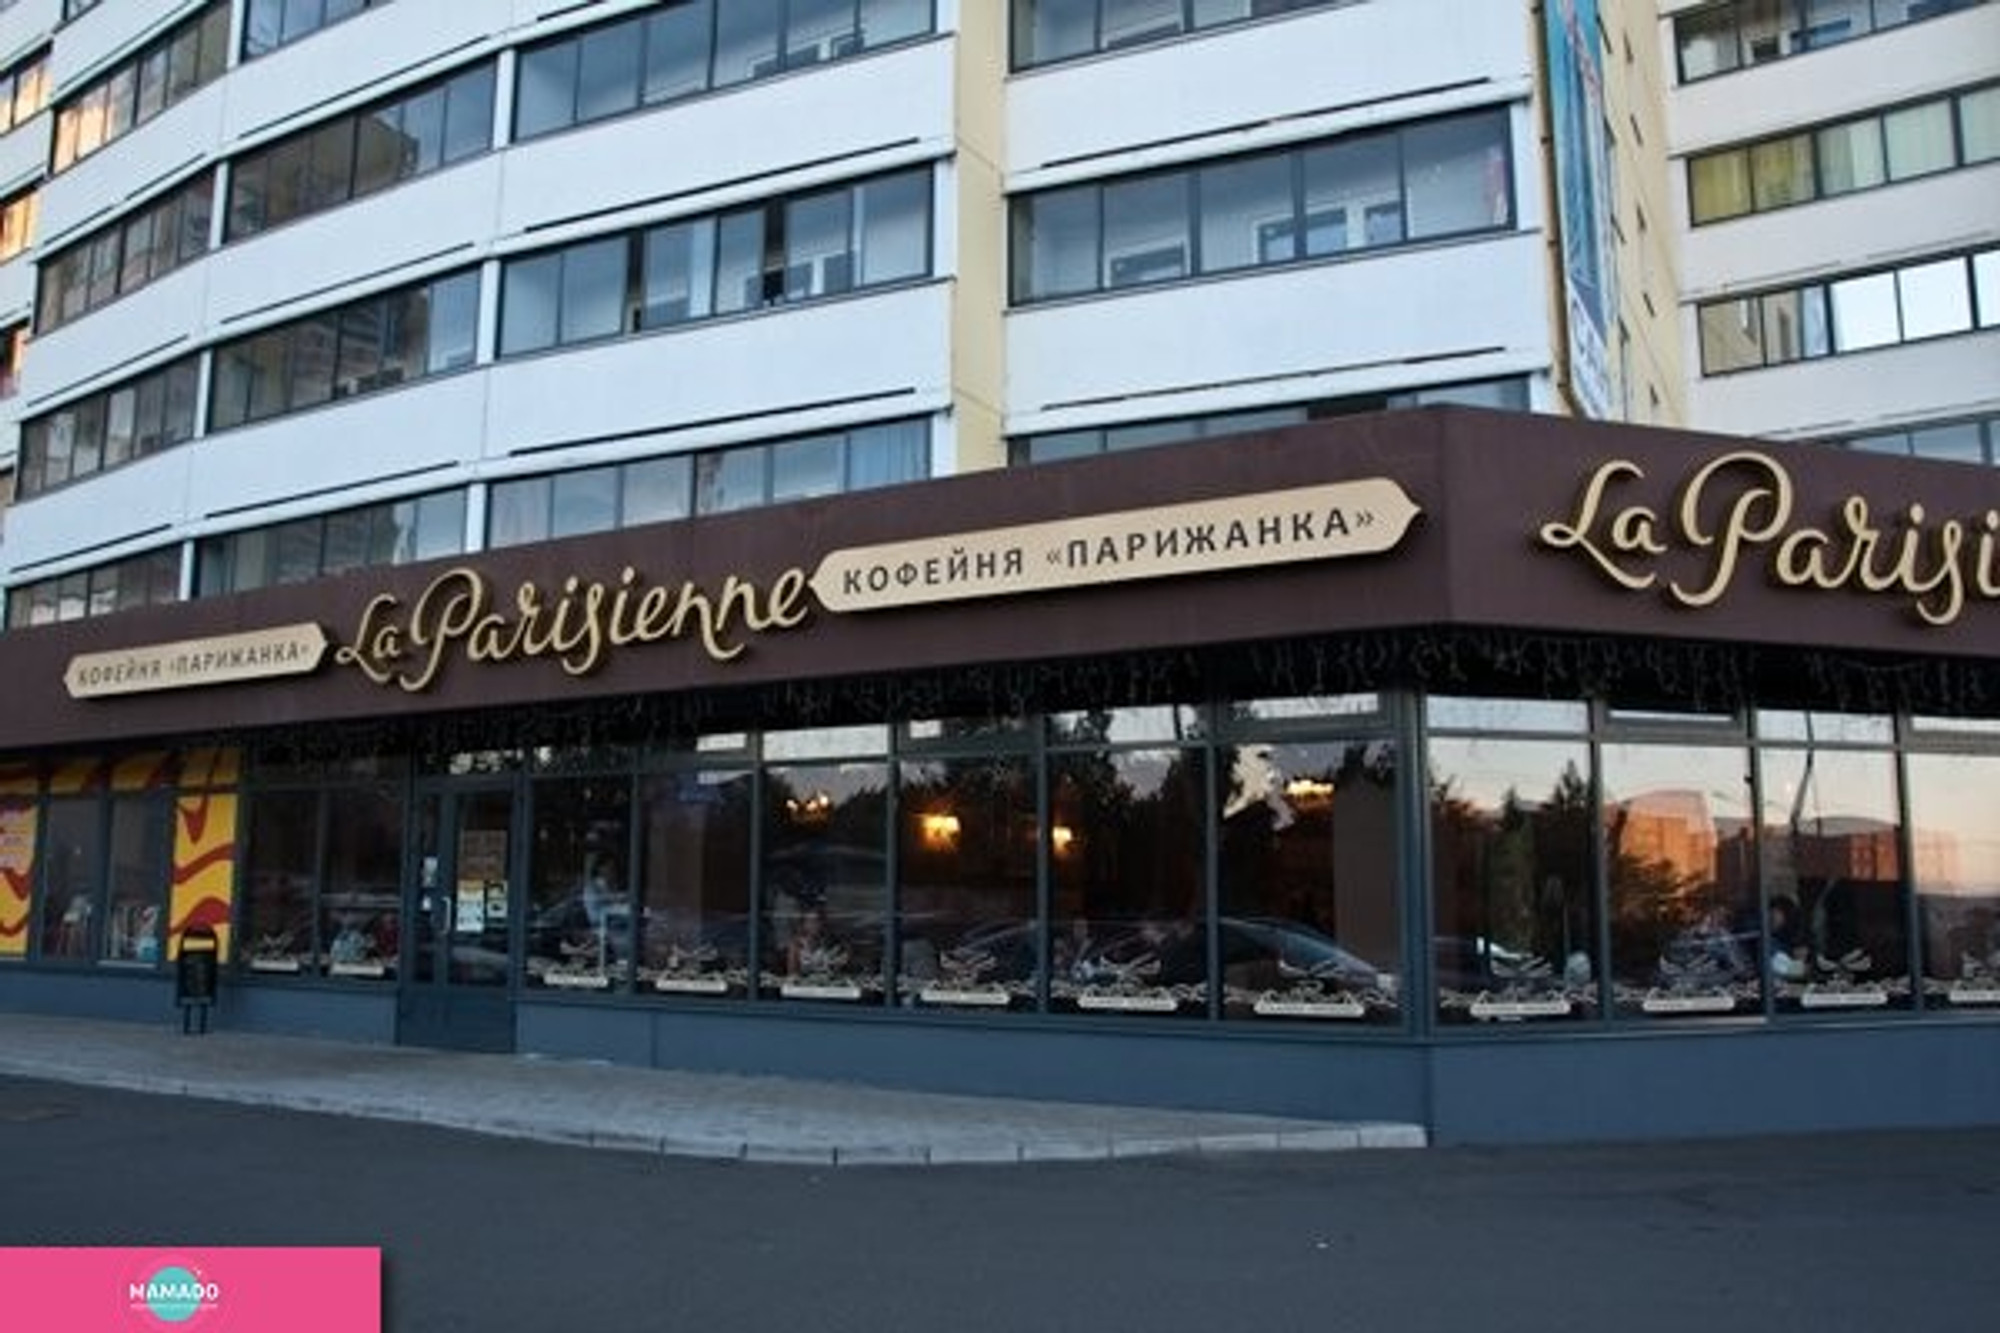 "Парижанка" на Правды, кафе в Петрозаводске 